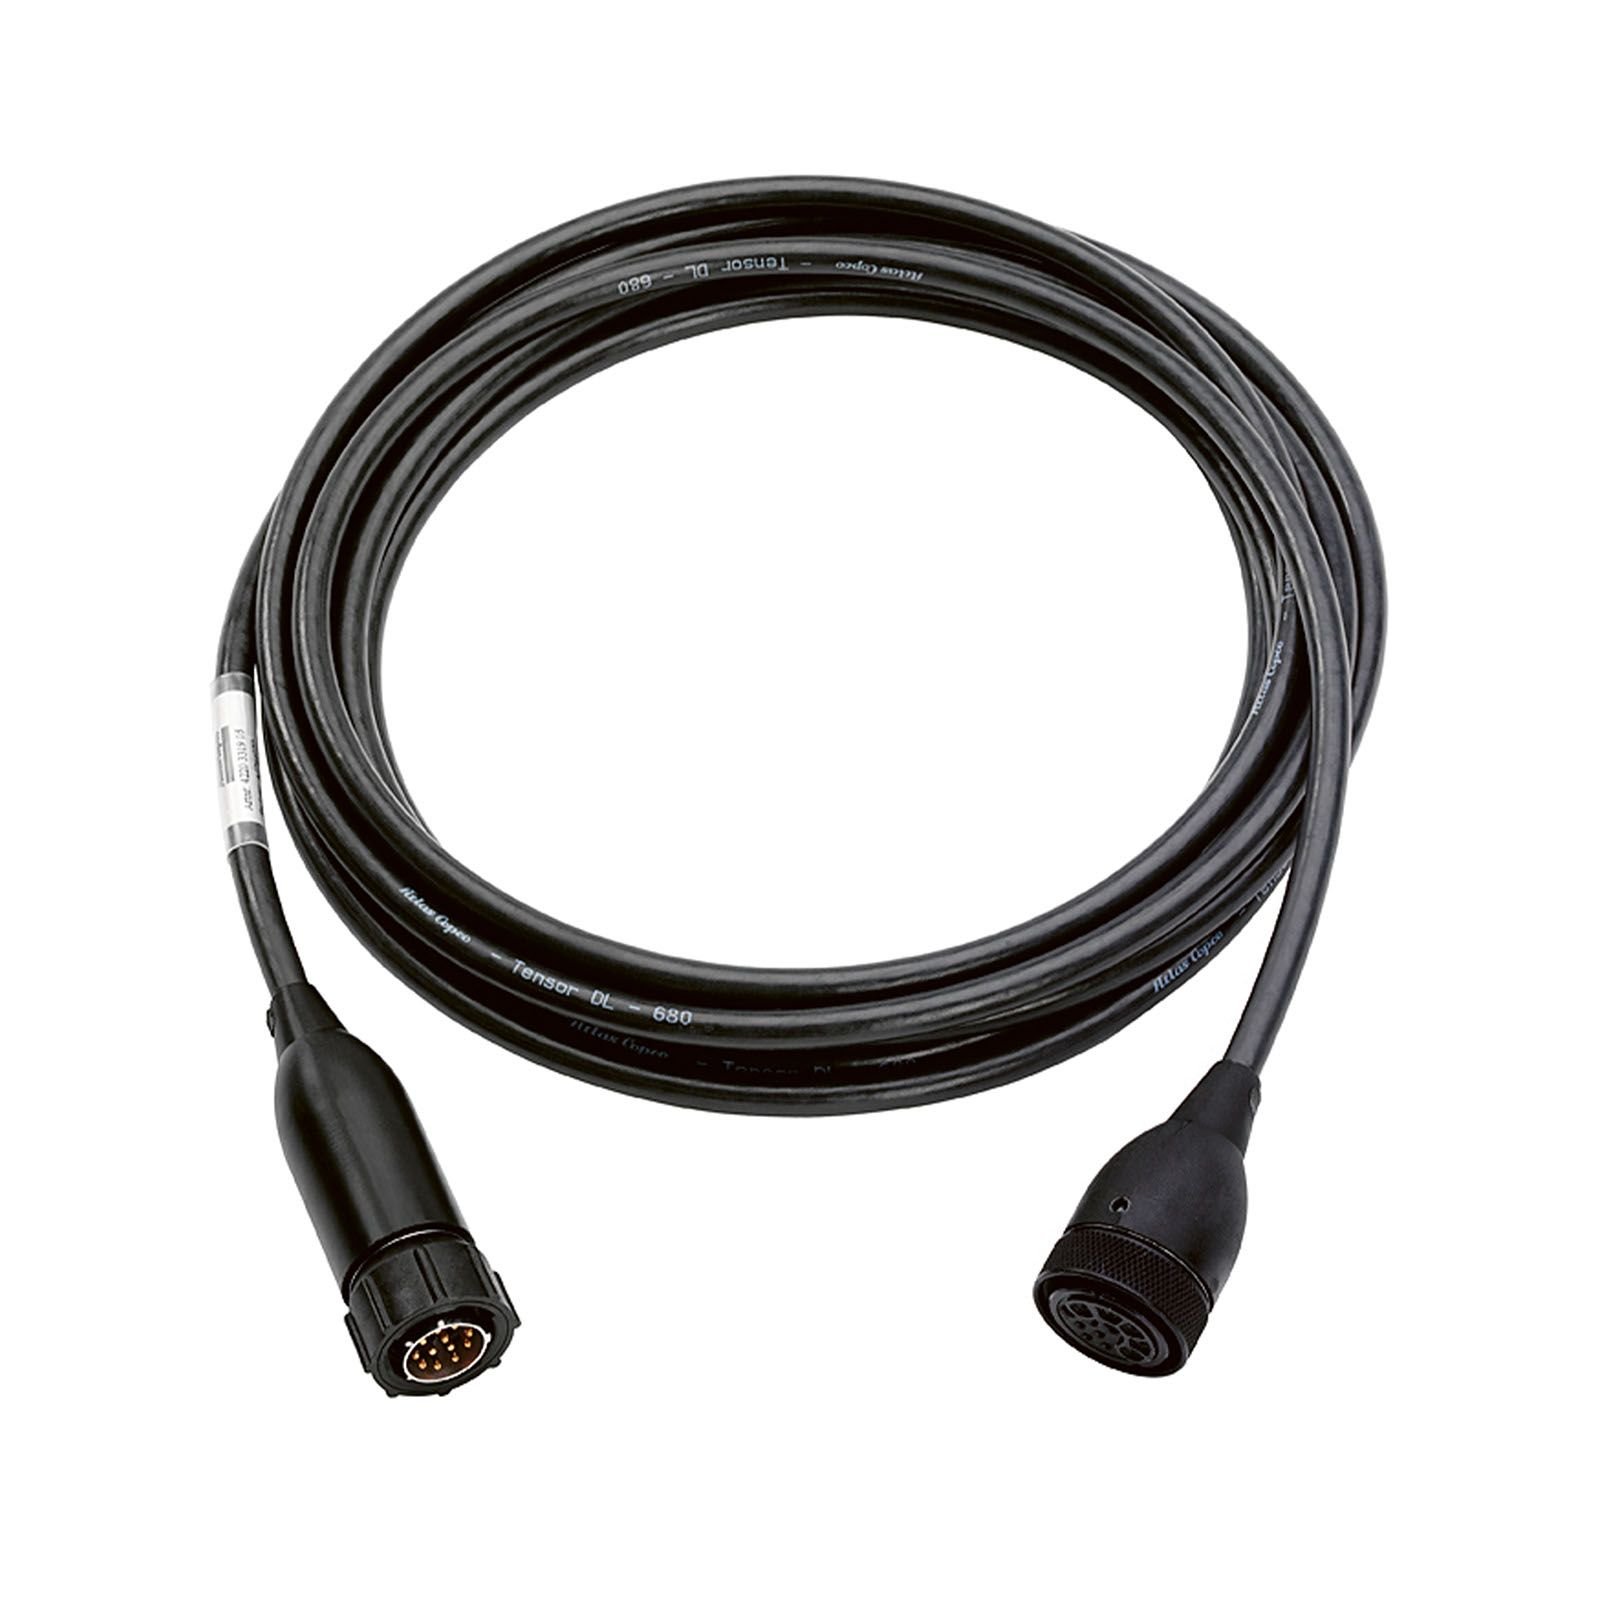 PF4002 Tool cable 3M SL produktfoto